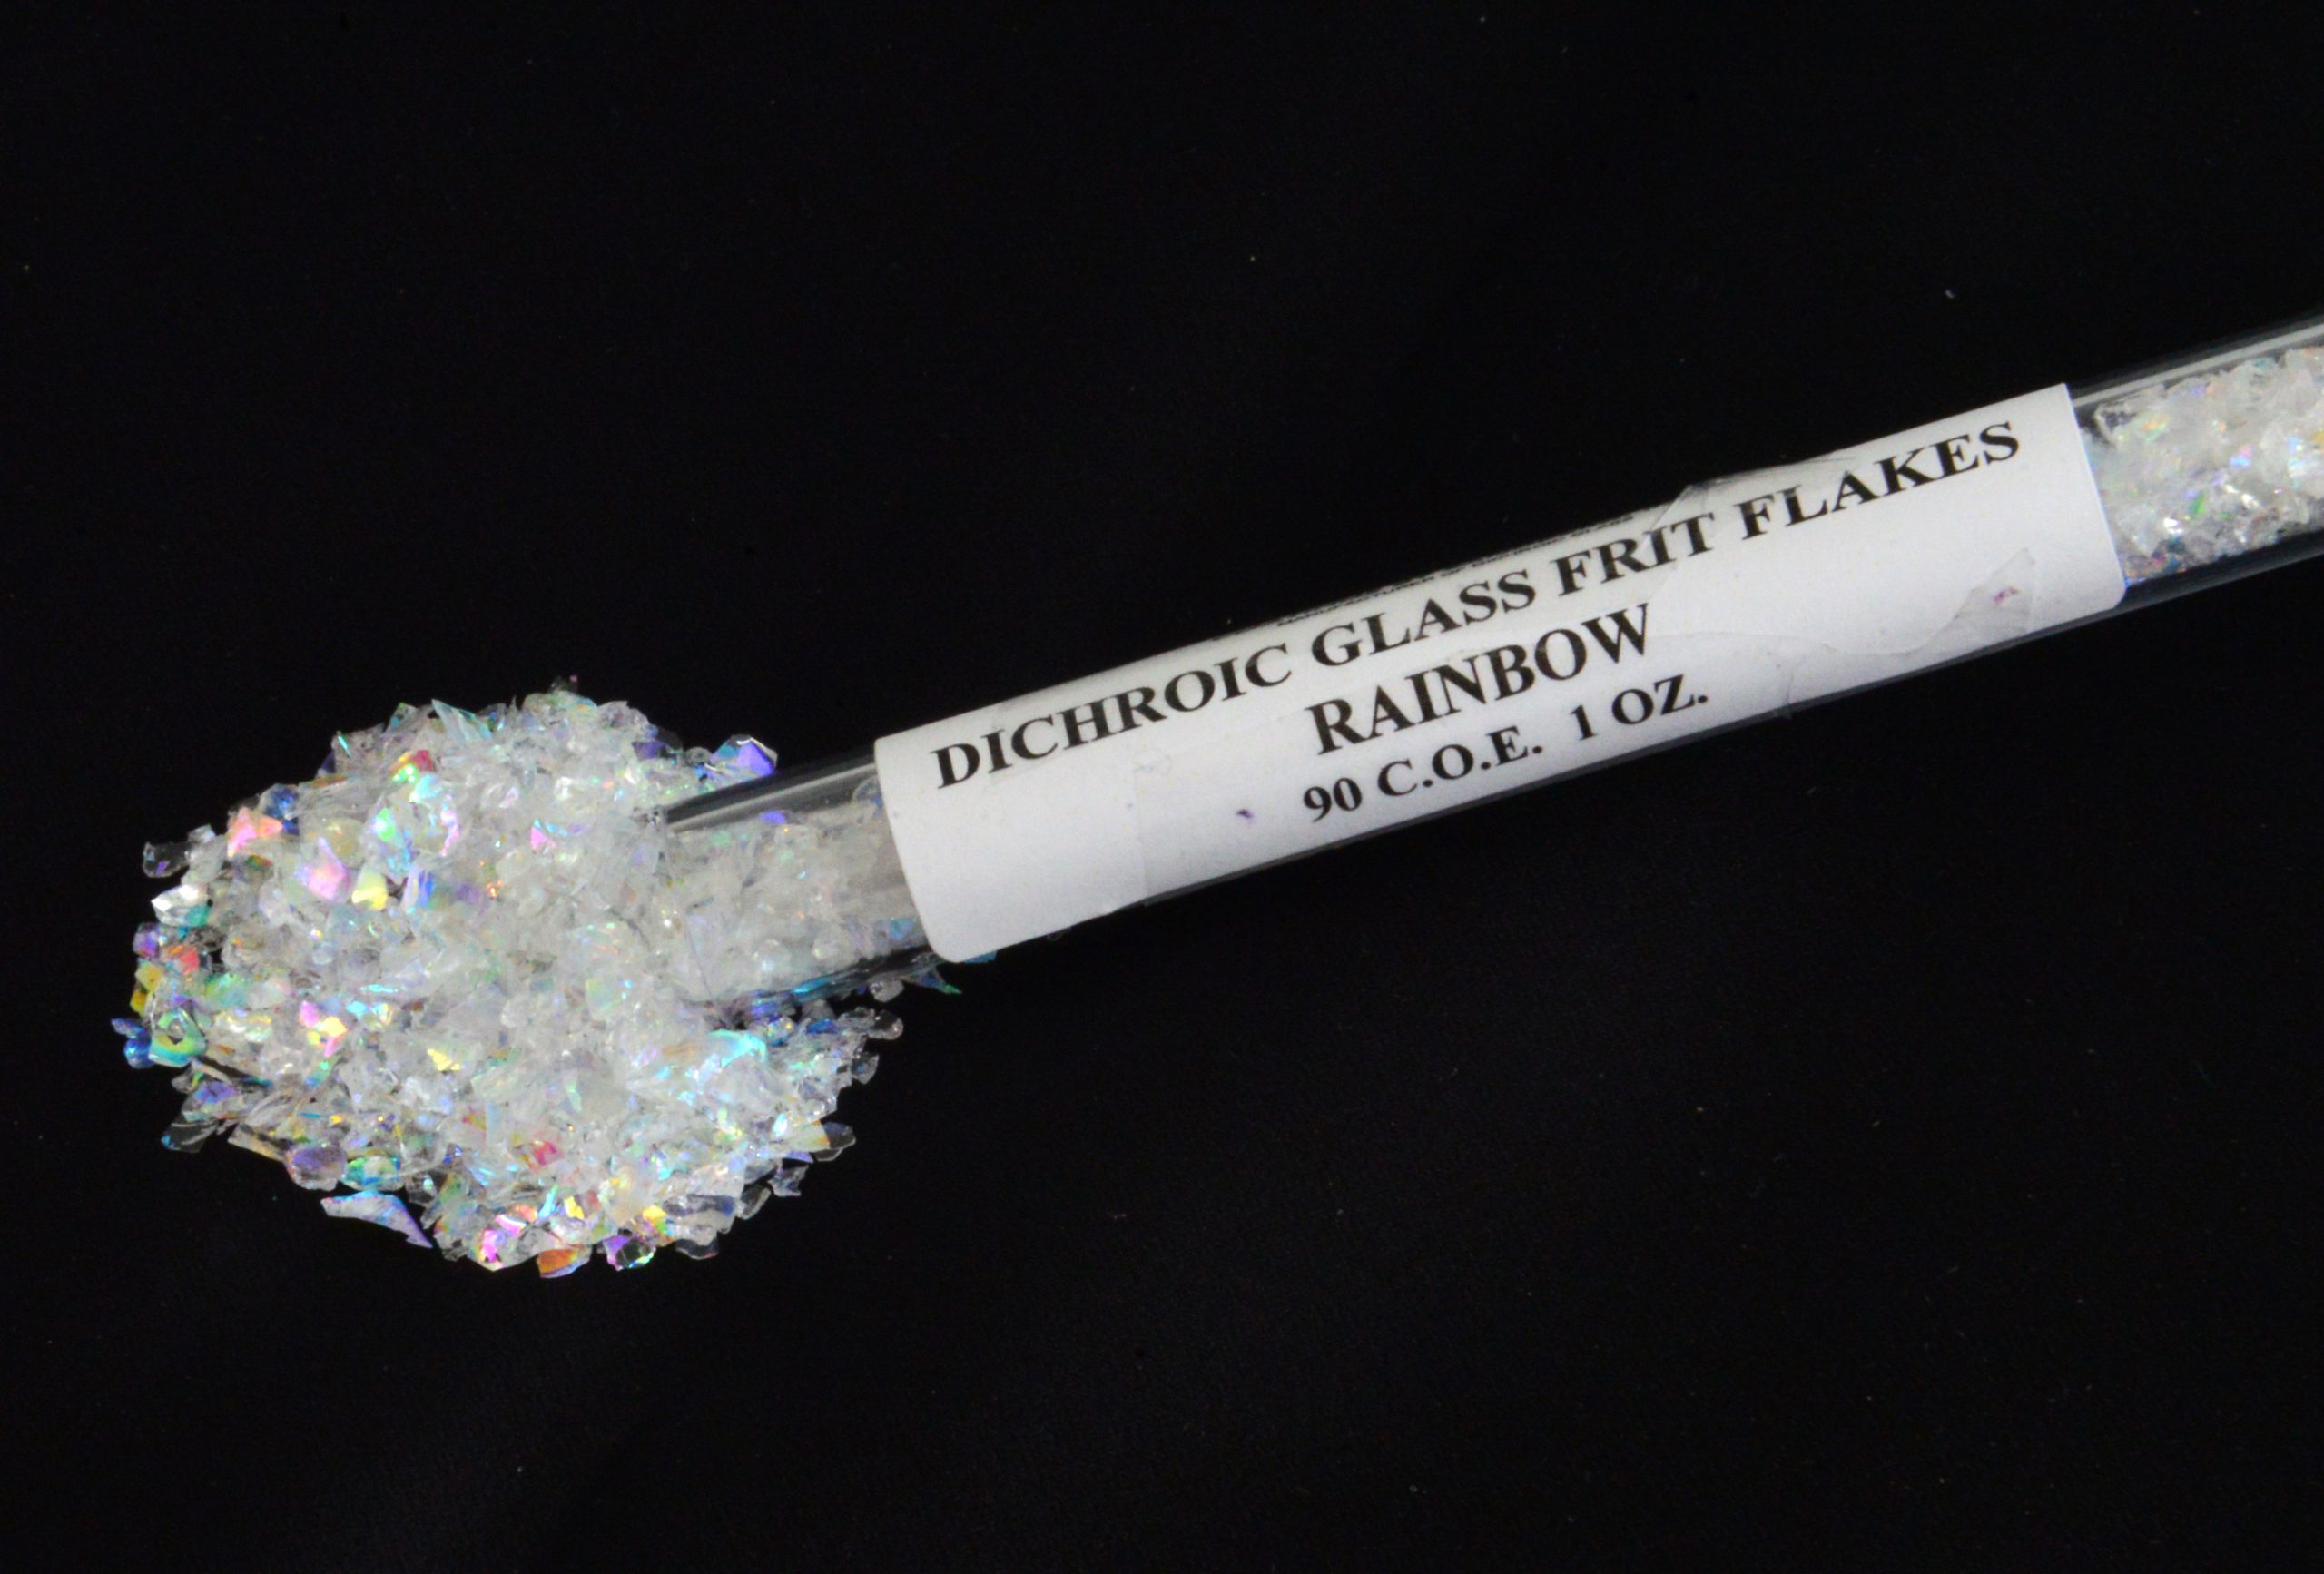 74566-1/2lb. CBS Dichroic Glass Jewelry Pack Thin Clear 96 COE